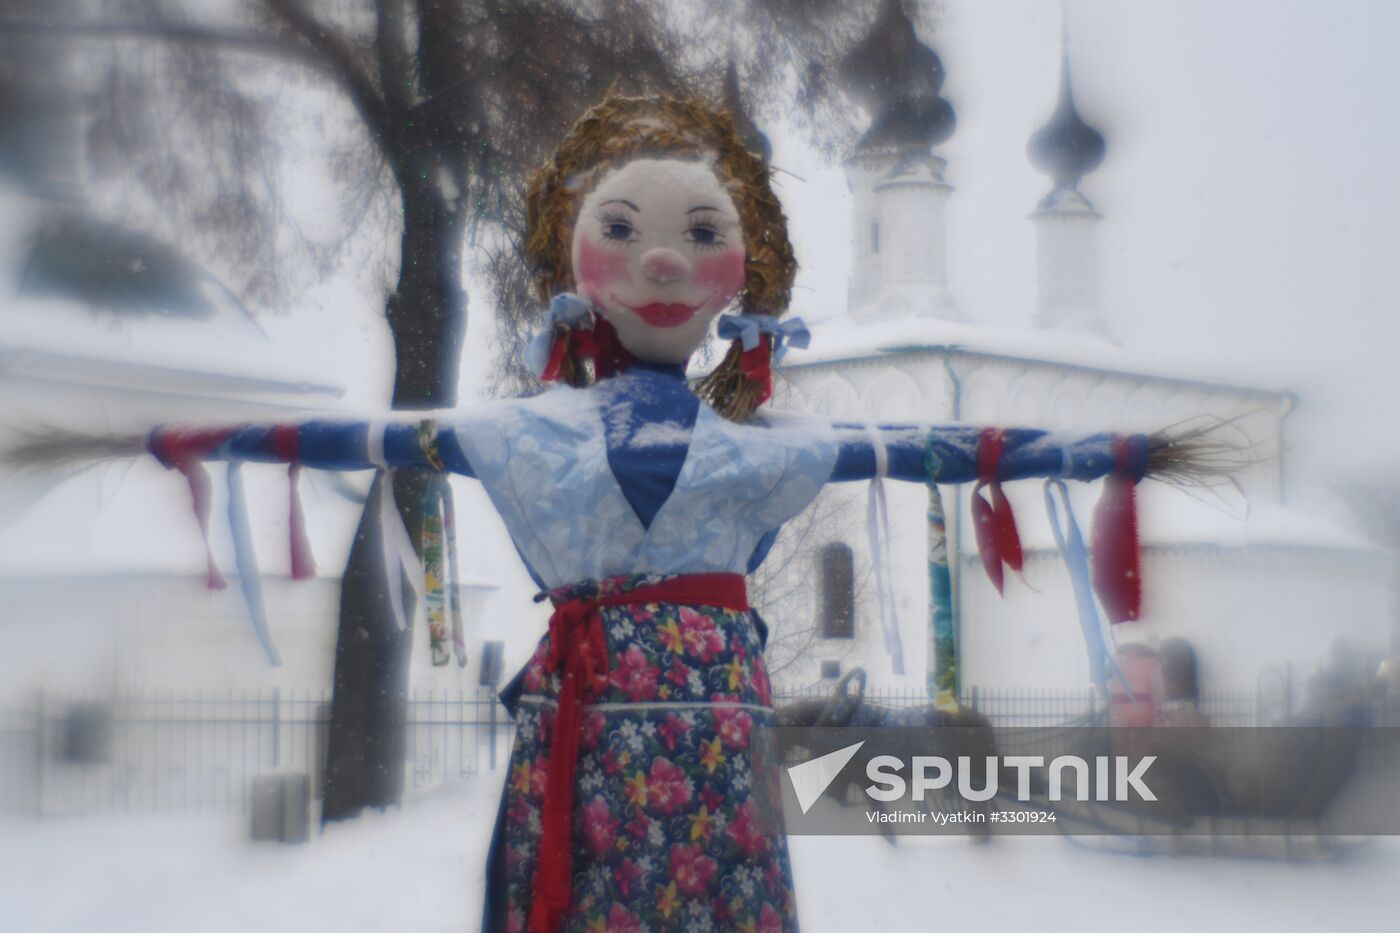 Celebration of Maslenitsa in Suzdal